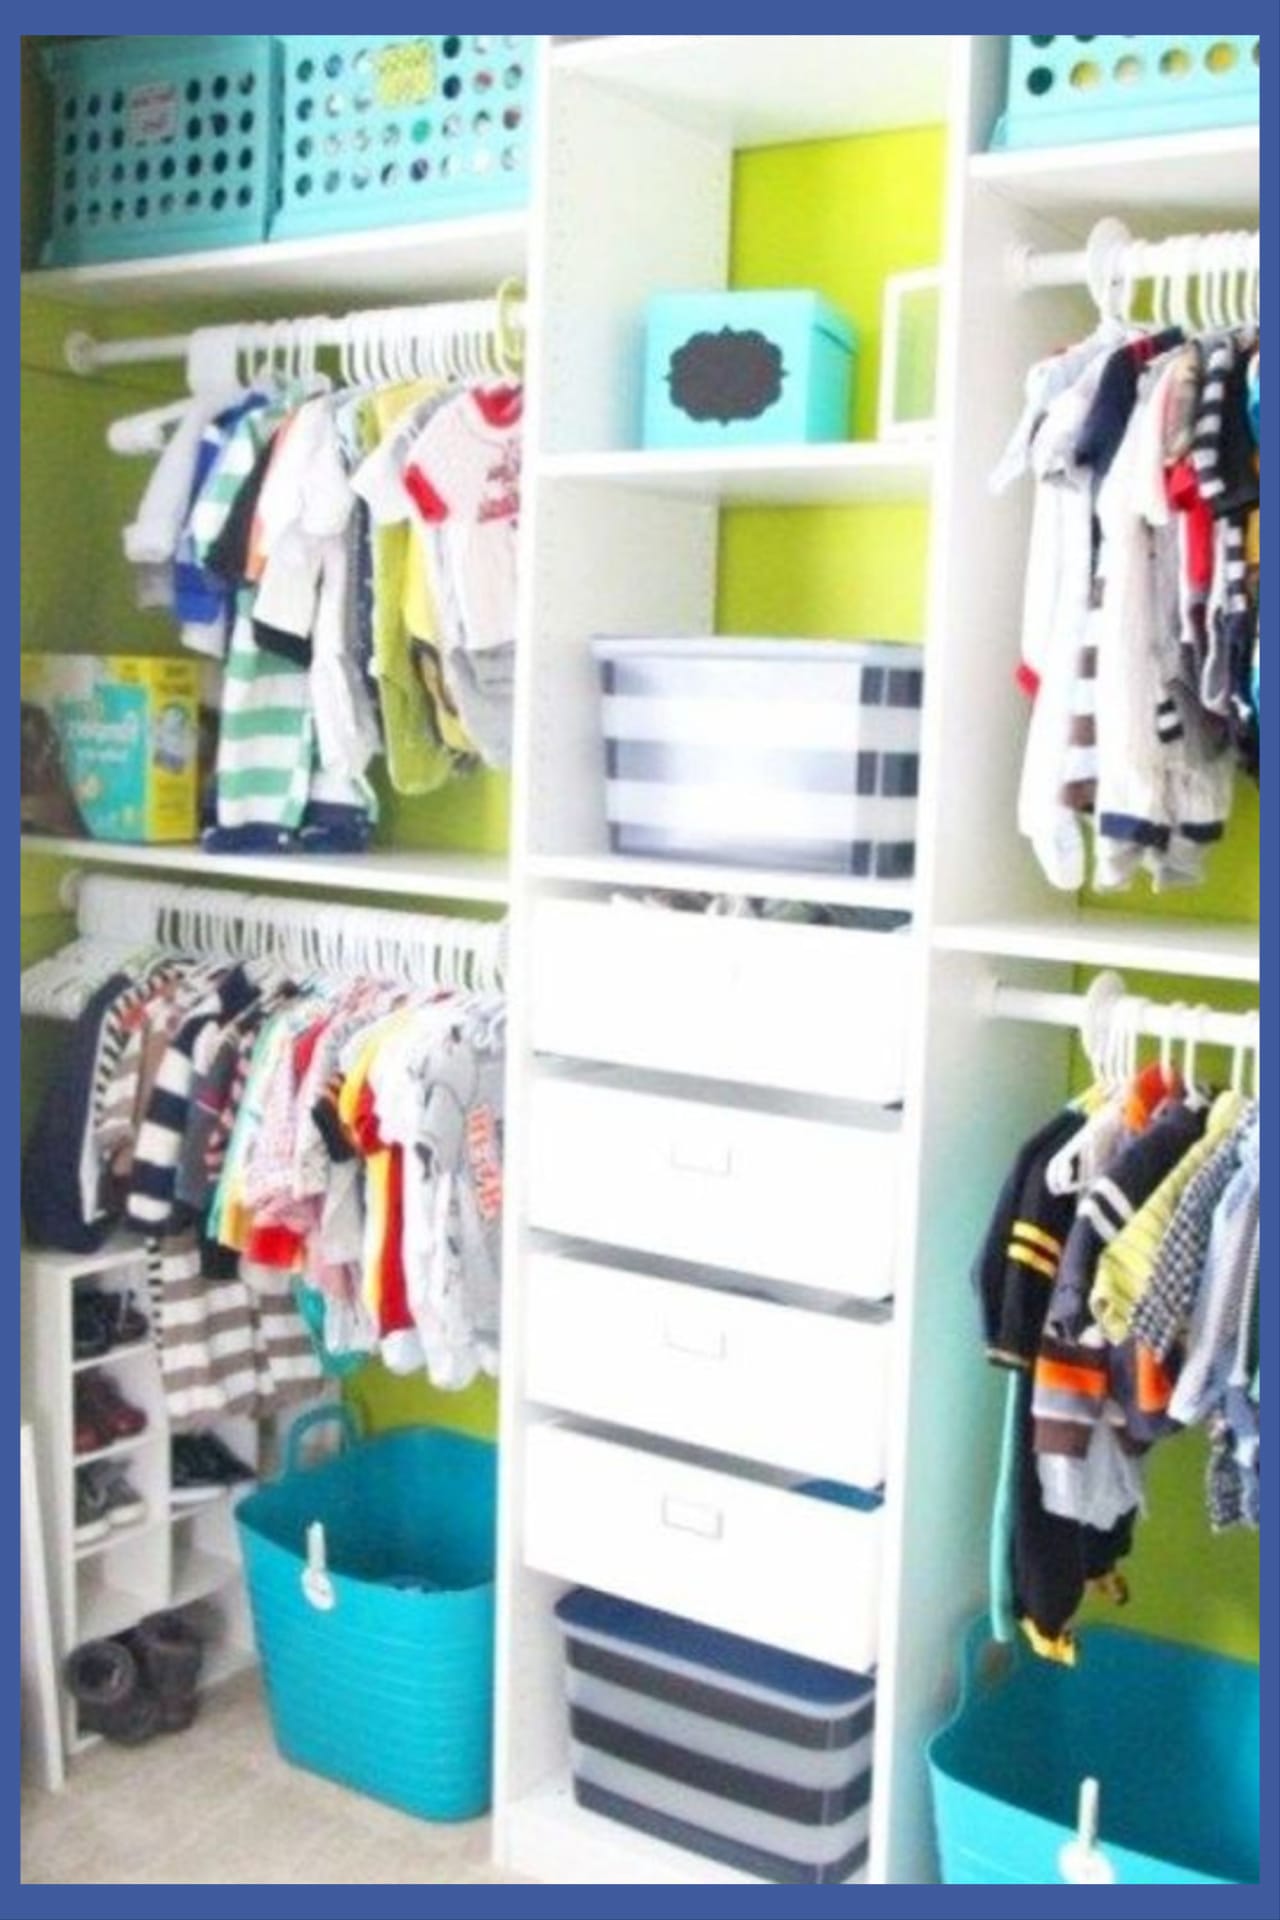 Organization Ideas for the Home - closet organization ideas - DIY baby closet organization and baby closthes organization ideas - creative nursery closet organization ideas